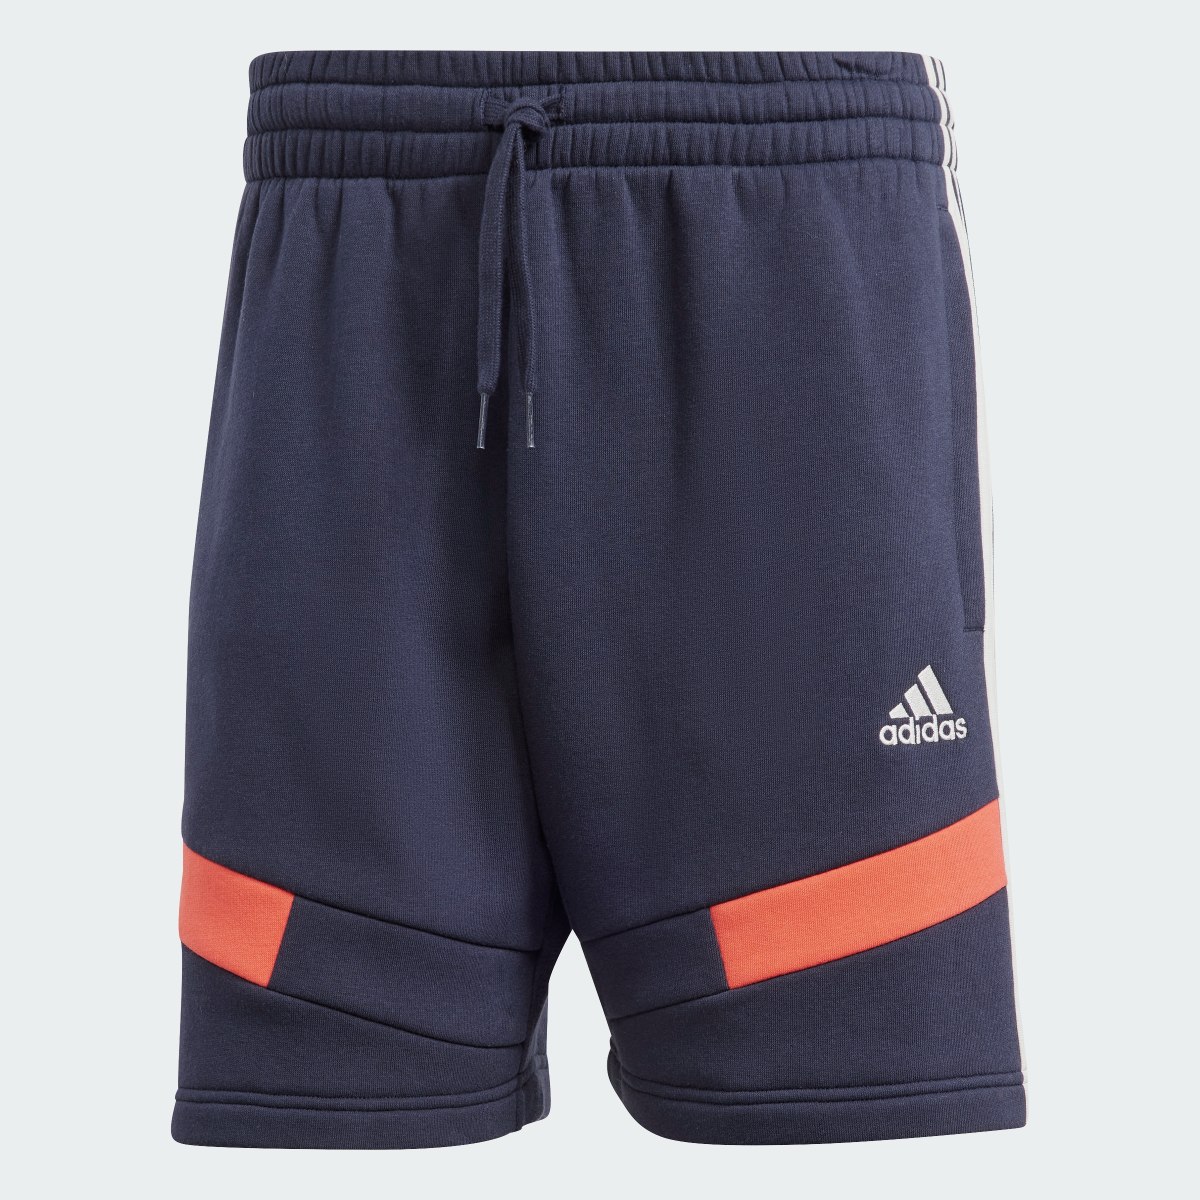 Adidas Colourblock Shorts. 4